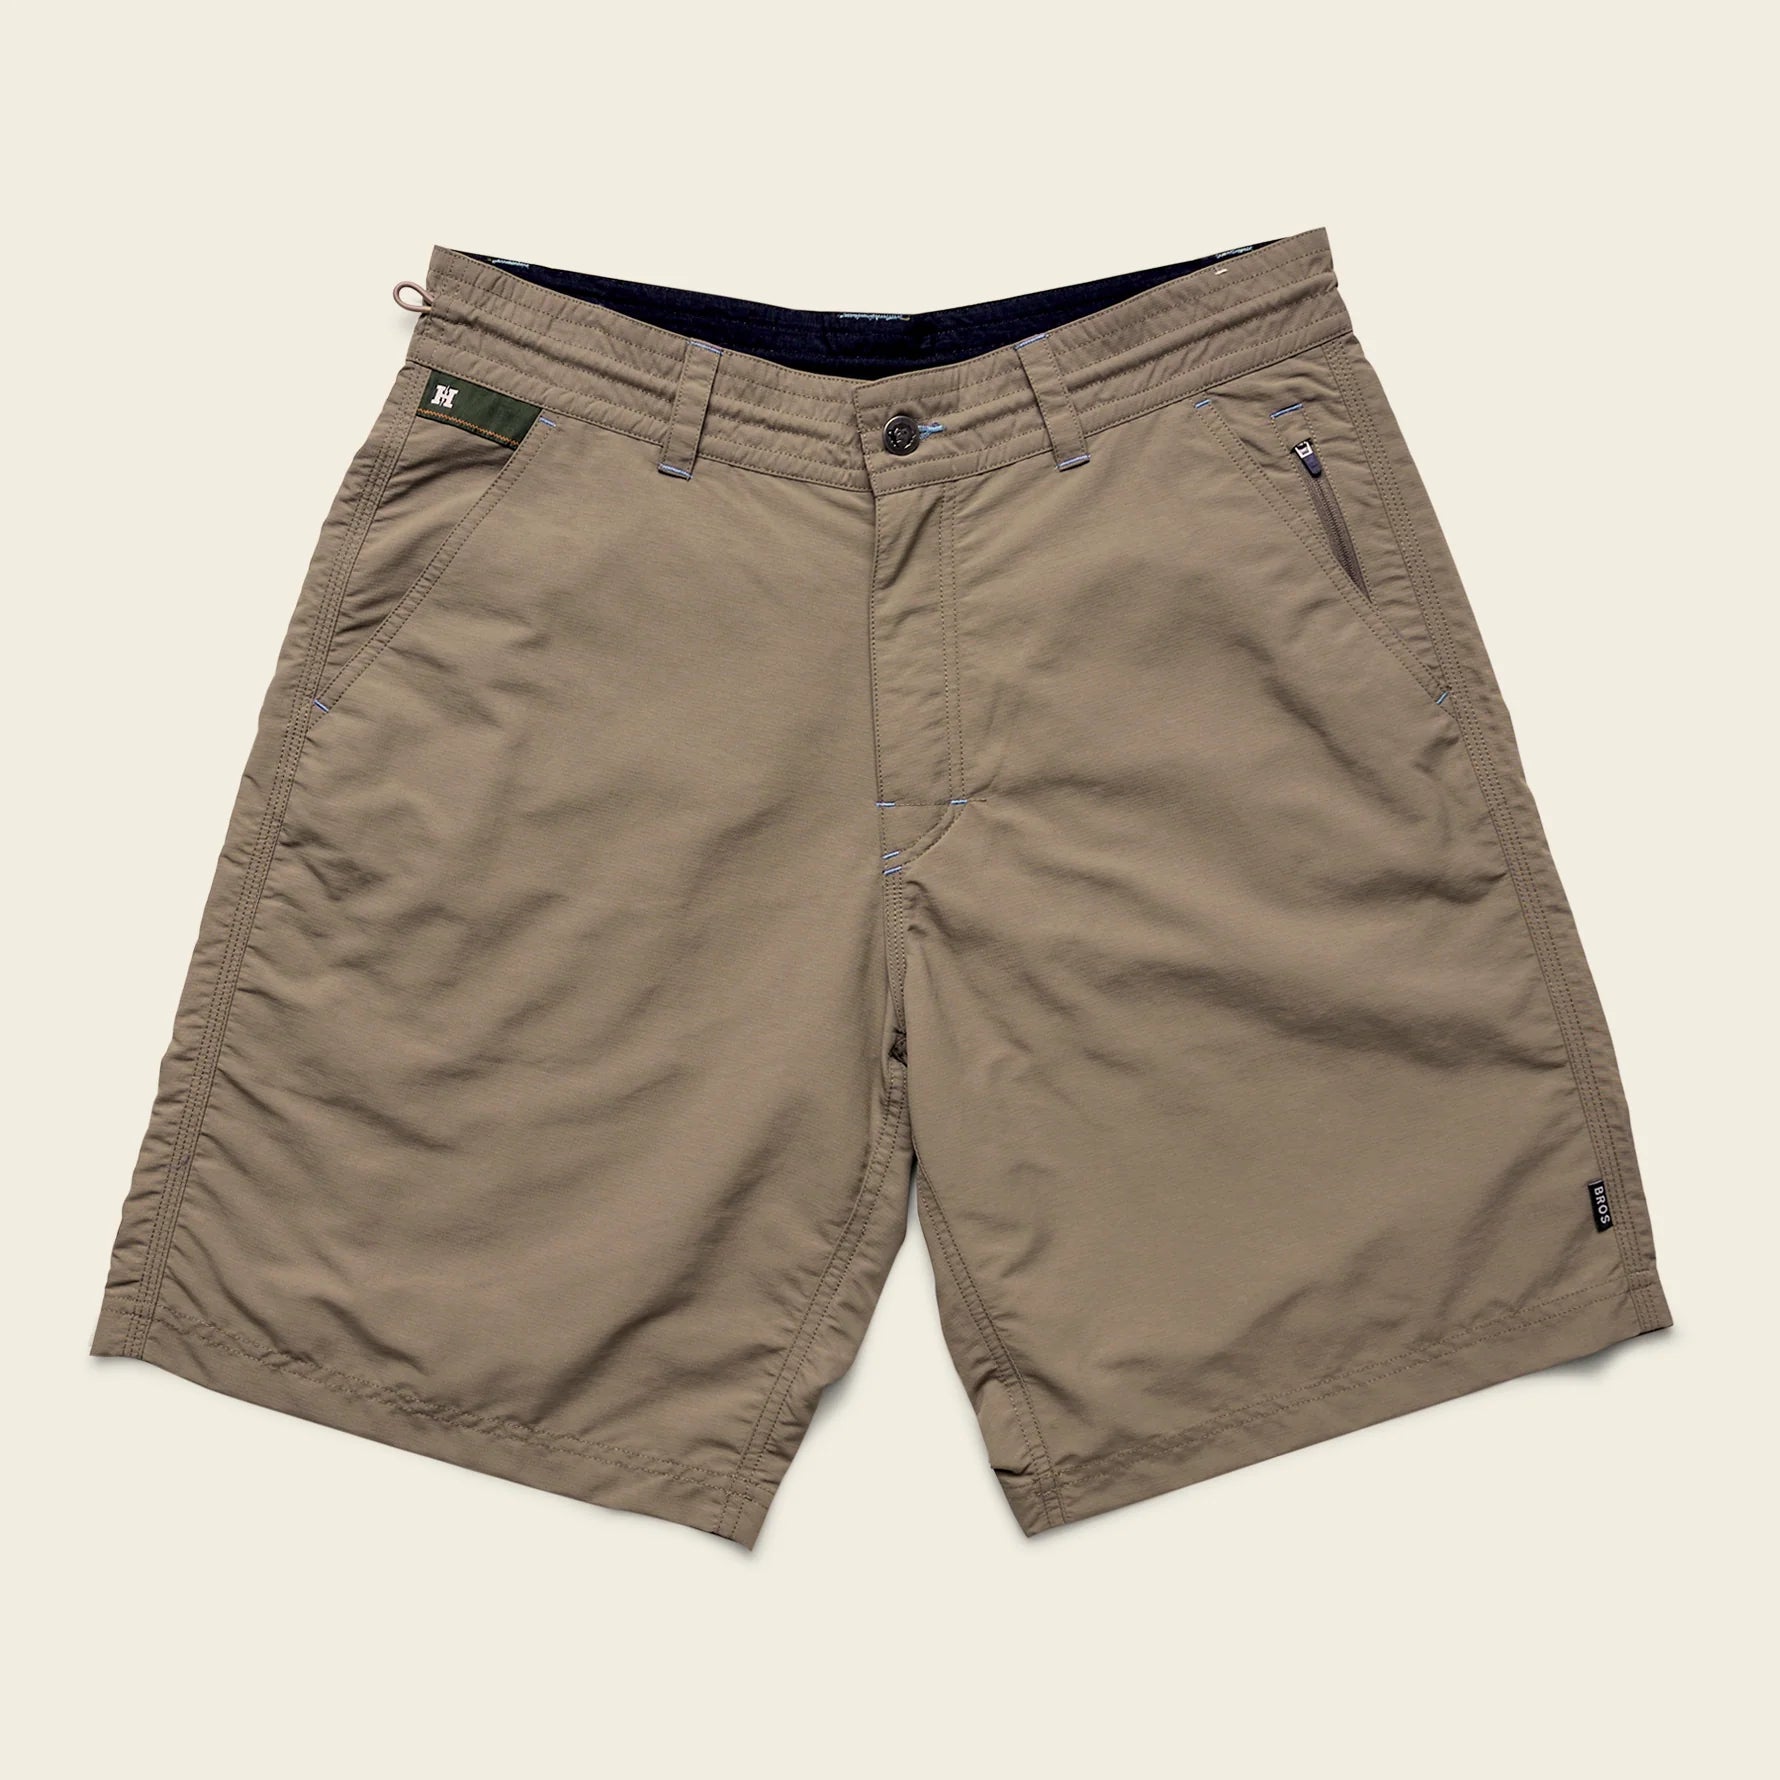 Howler Brothers Horizon Hybrid Shorts 2.0 - 7.5" Inseam